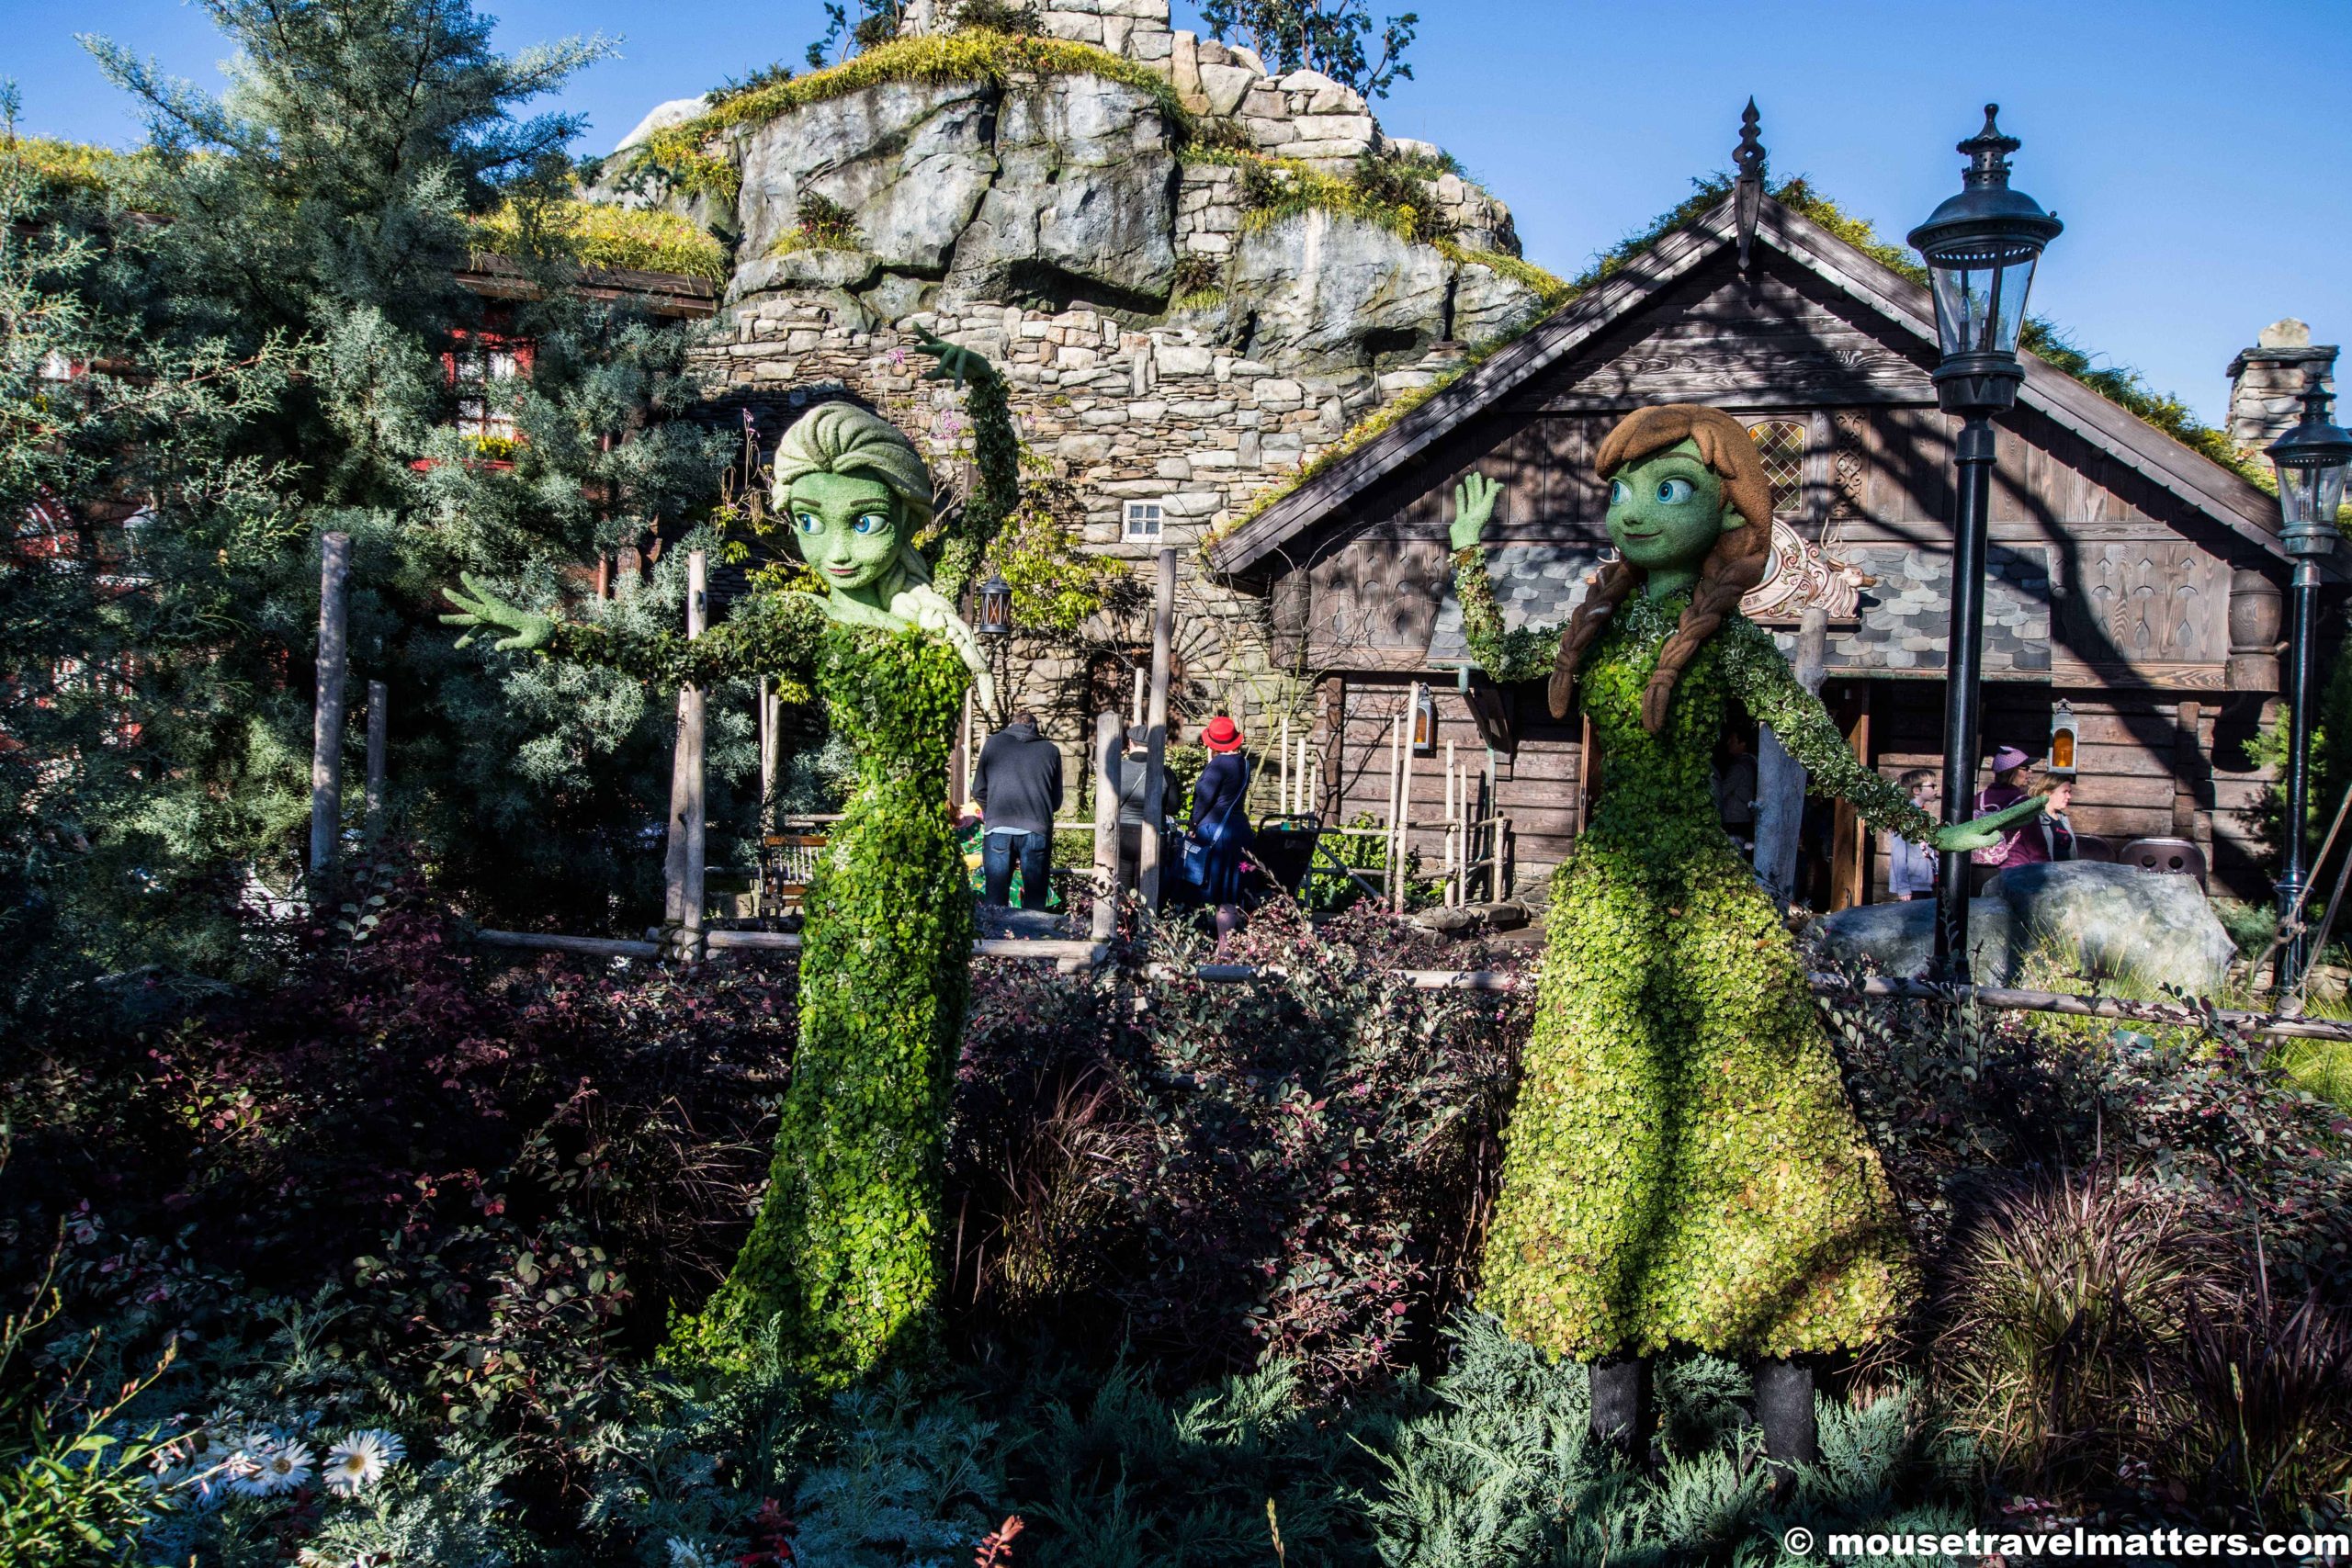 Elsa & Anna Topiary Norway Pavilion